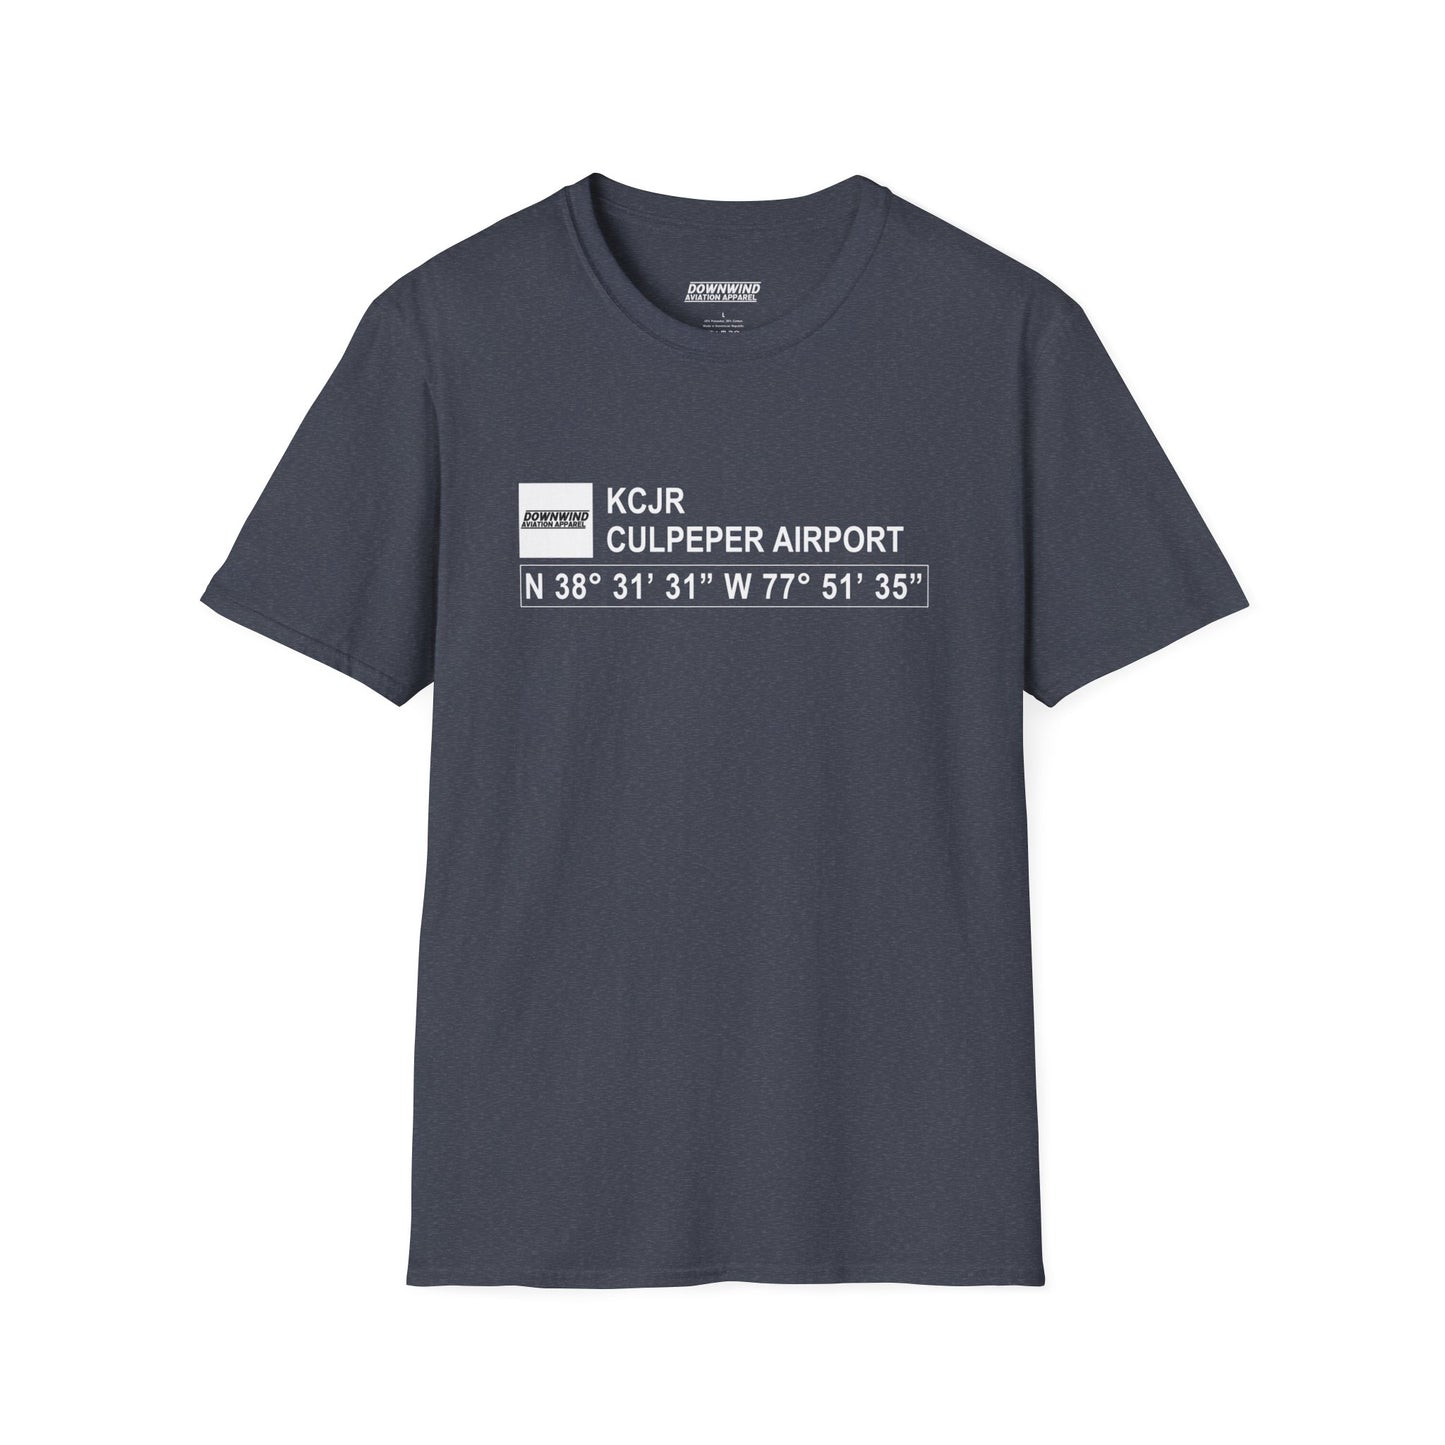 KCJR / Culpeper Airport T-Shirt